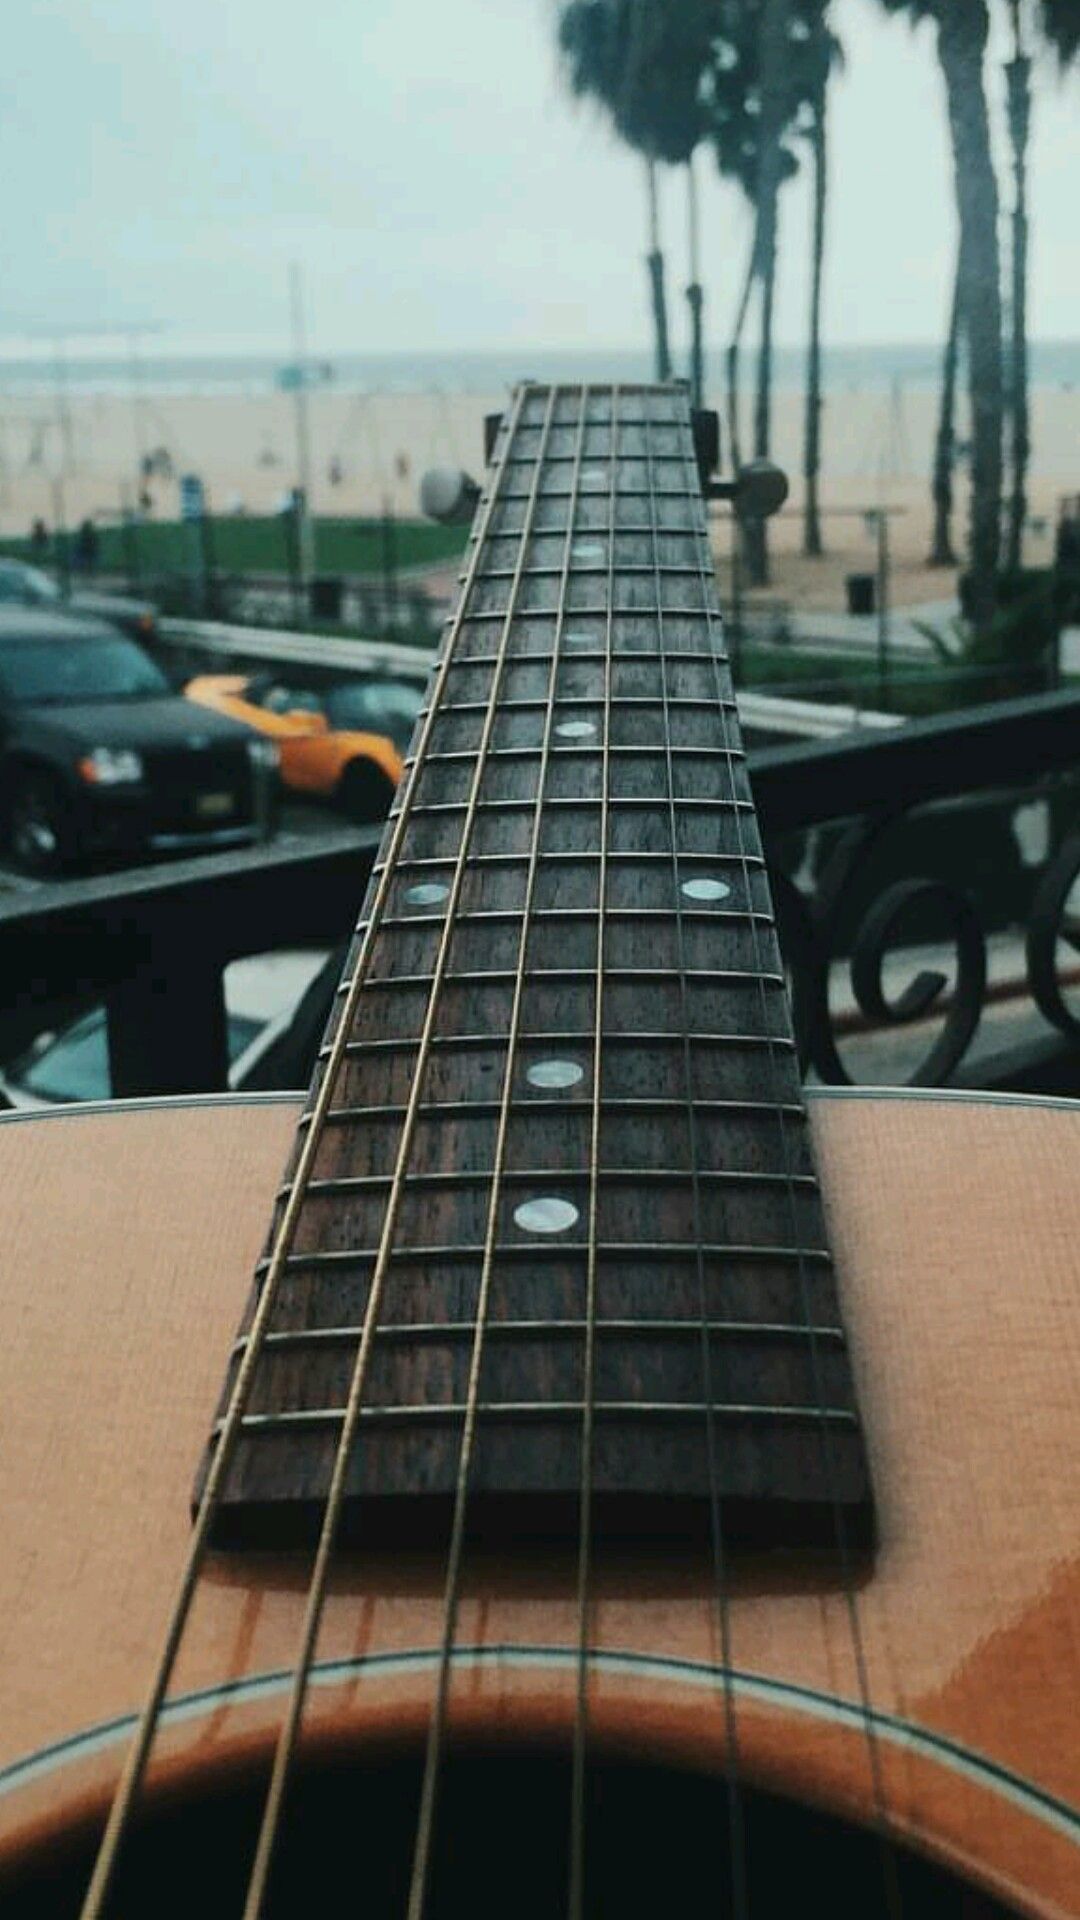 Guitar Wallpaper From Alex Aiono Post On Instagram M Sica De